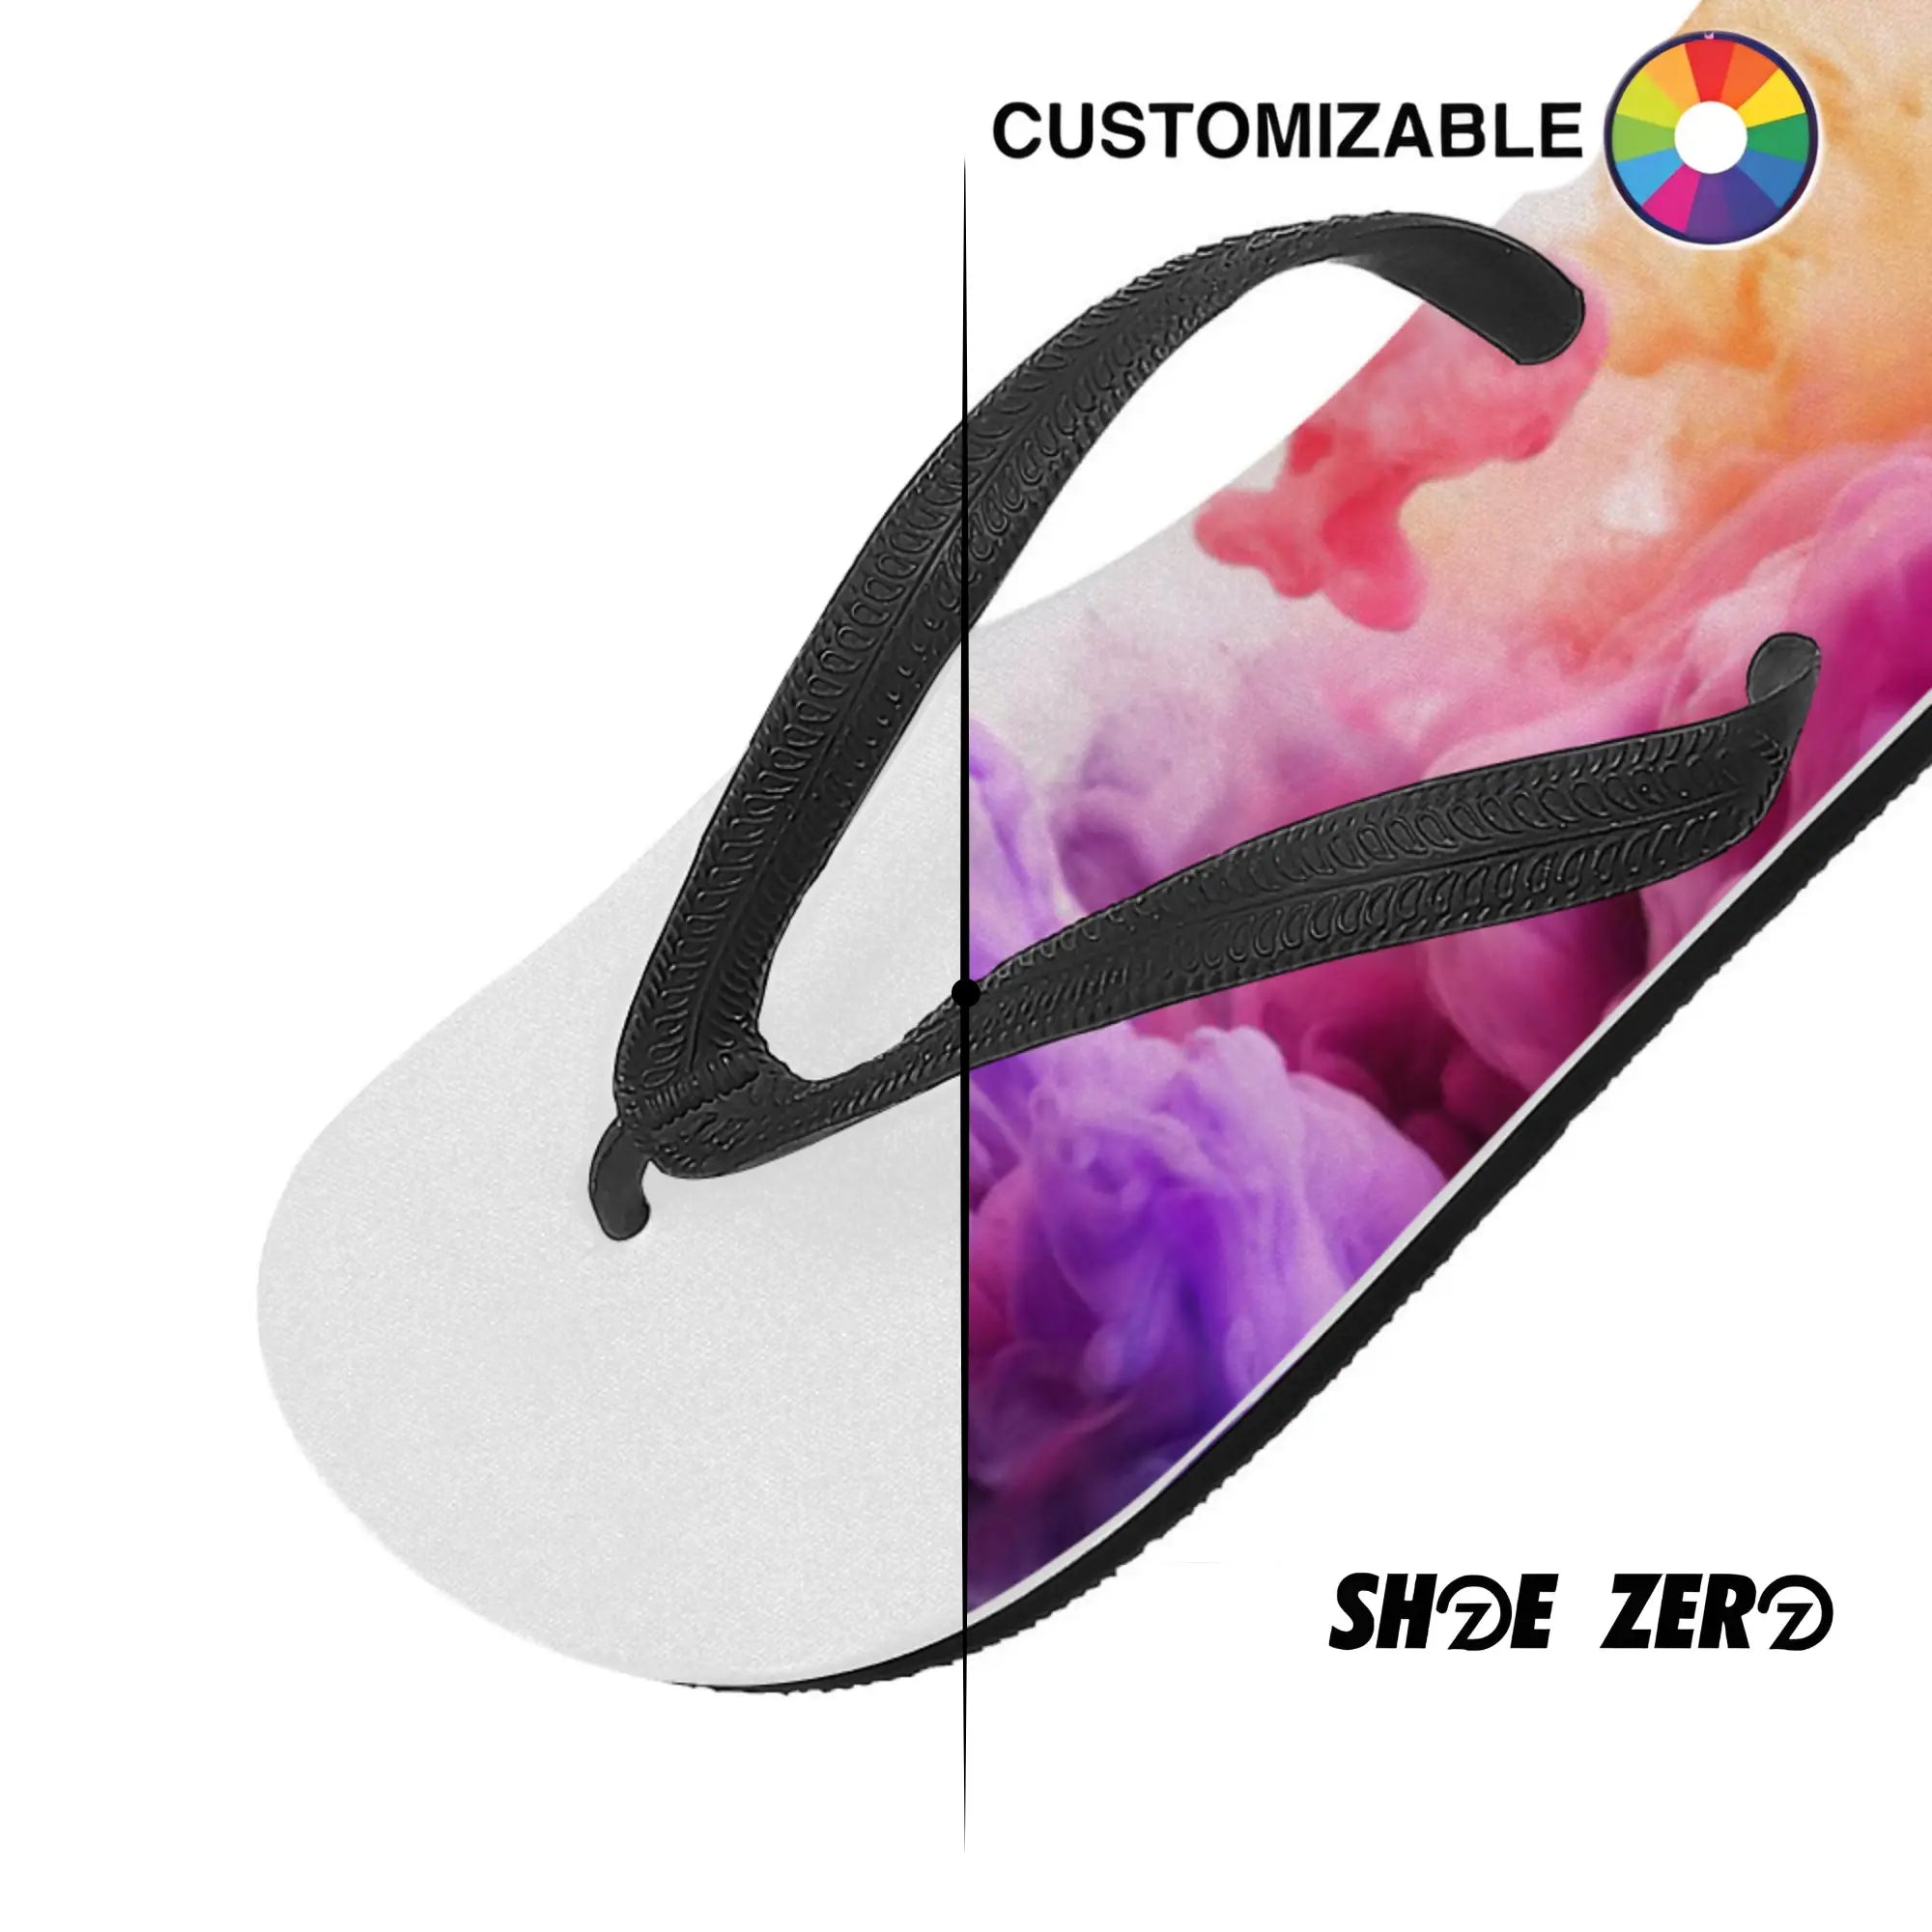 Customizable Flip Flops